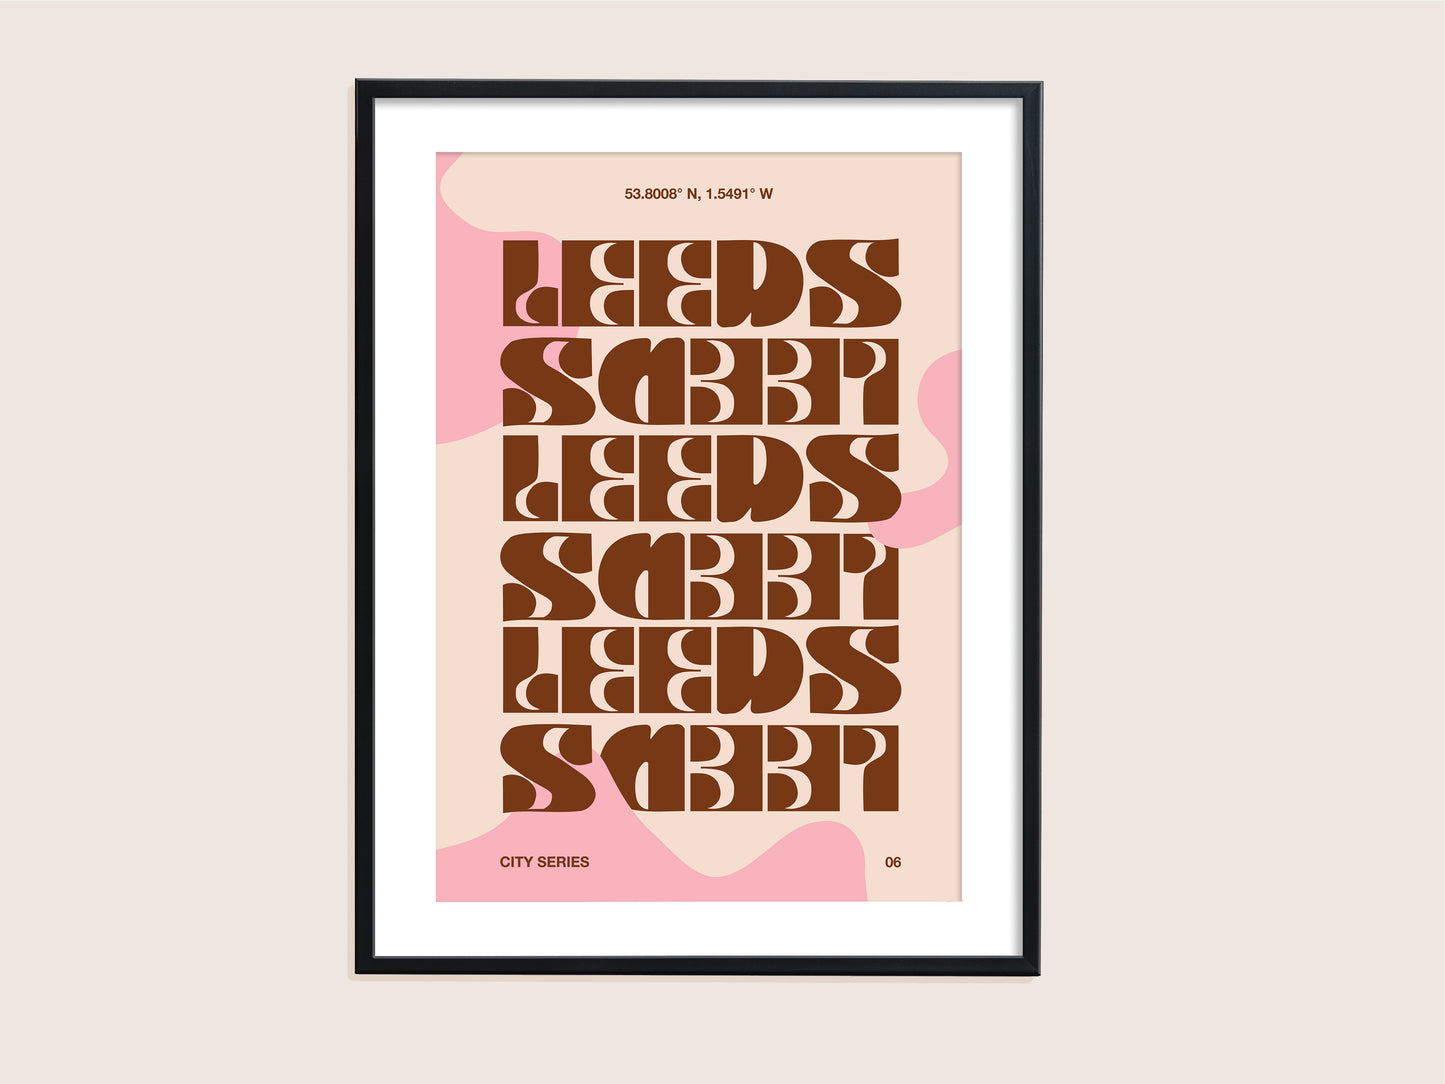 Leeds Print